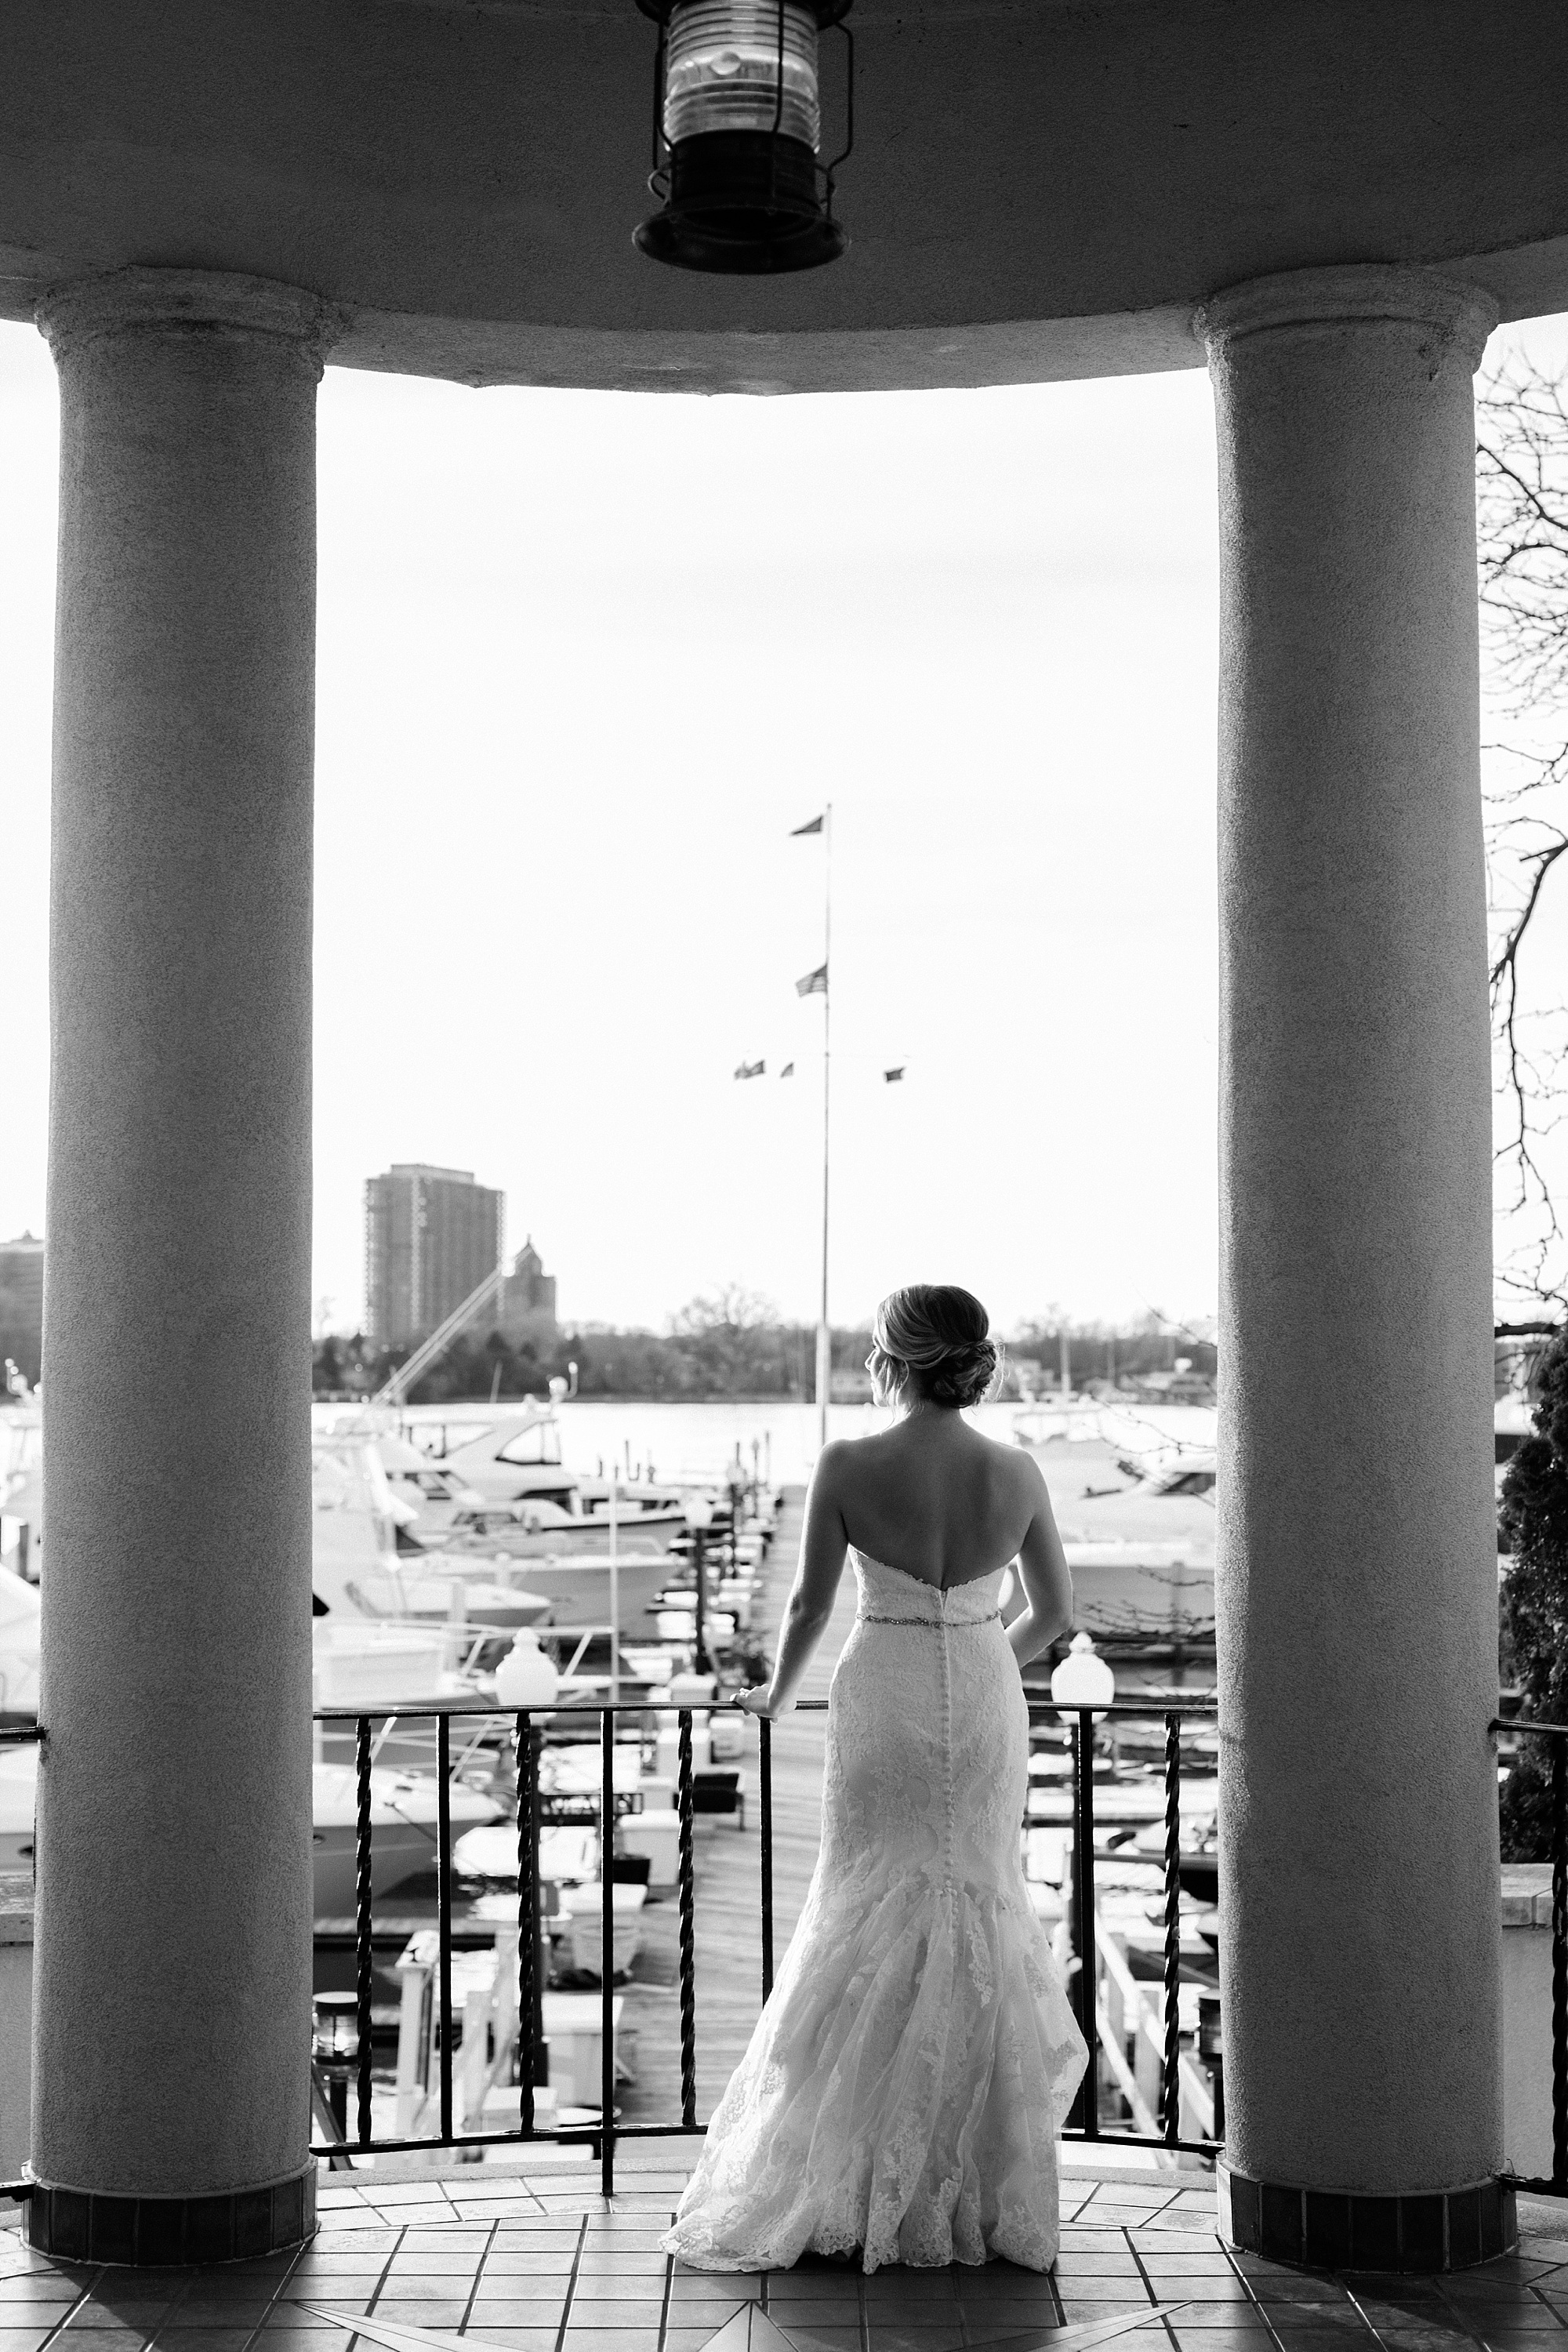 Elegant Spring Detroit Yacht Club Wedding in Detroit, Michigan by Breanne Rochelle Photography.